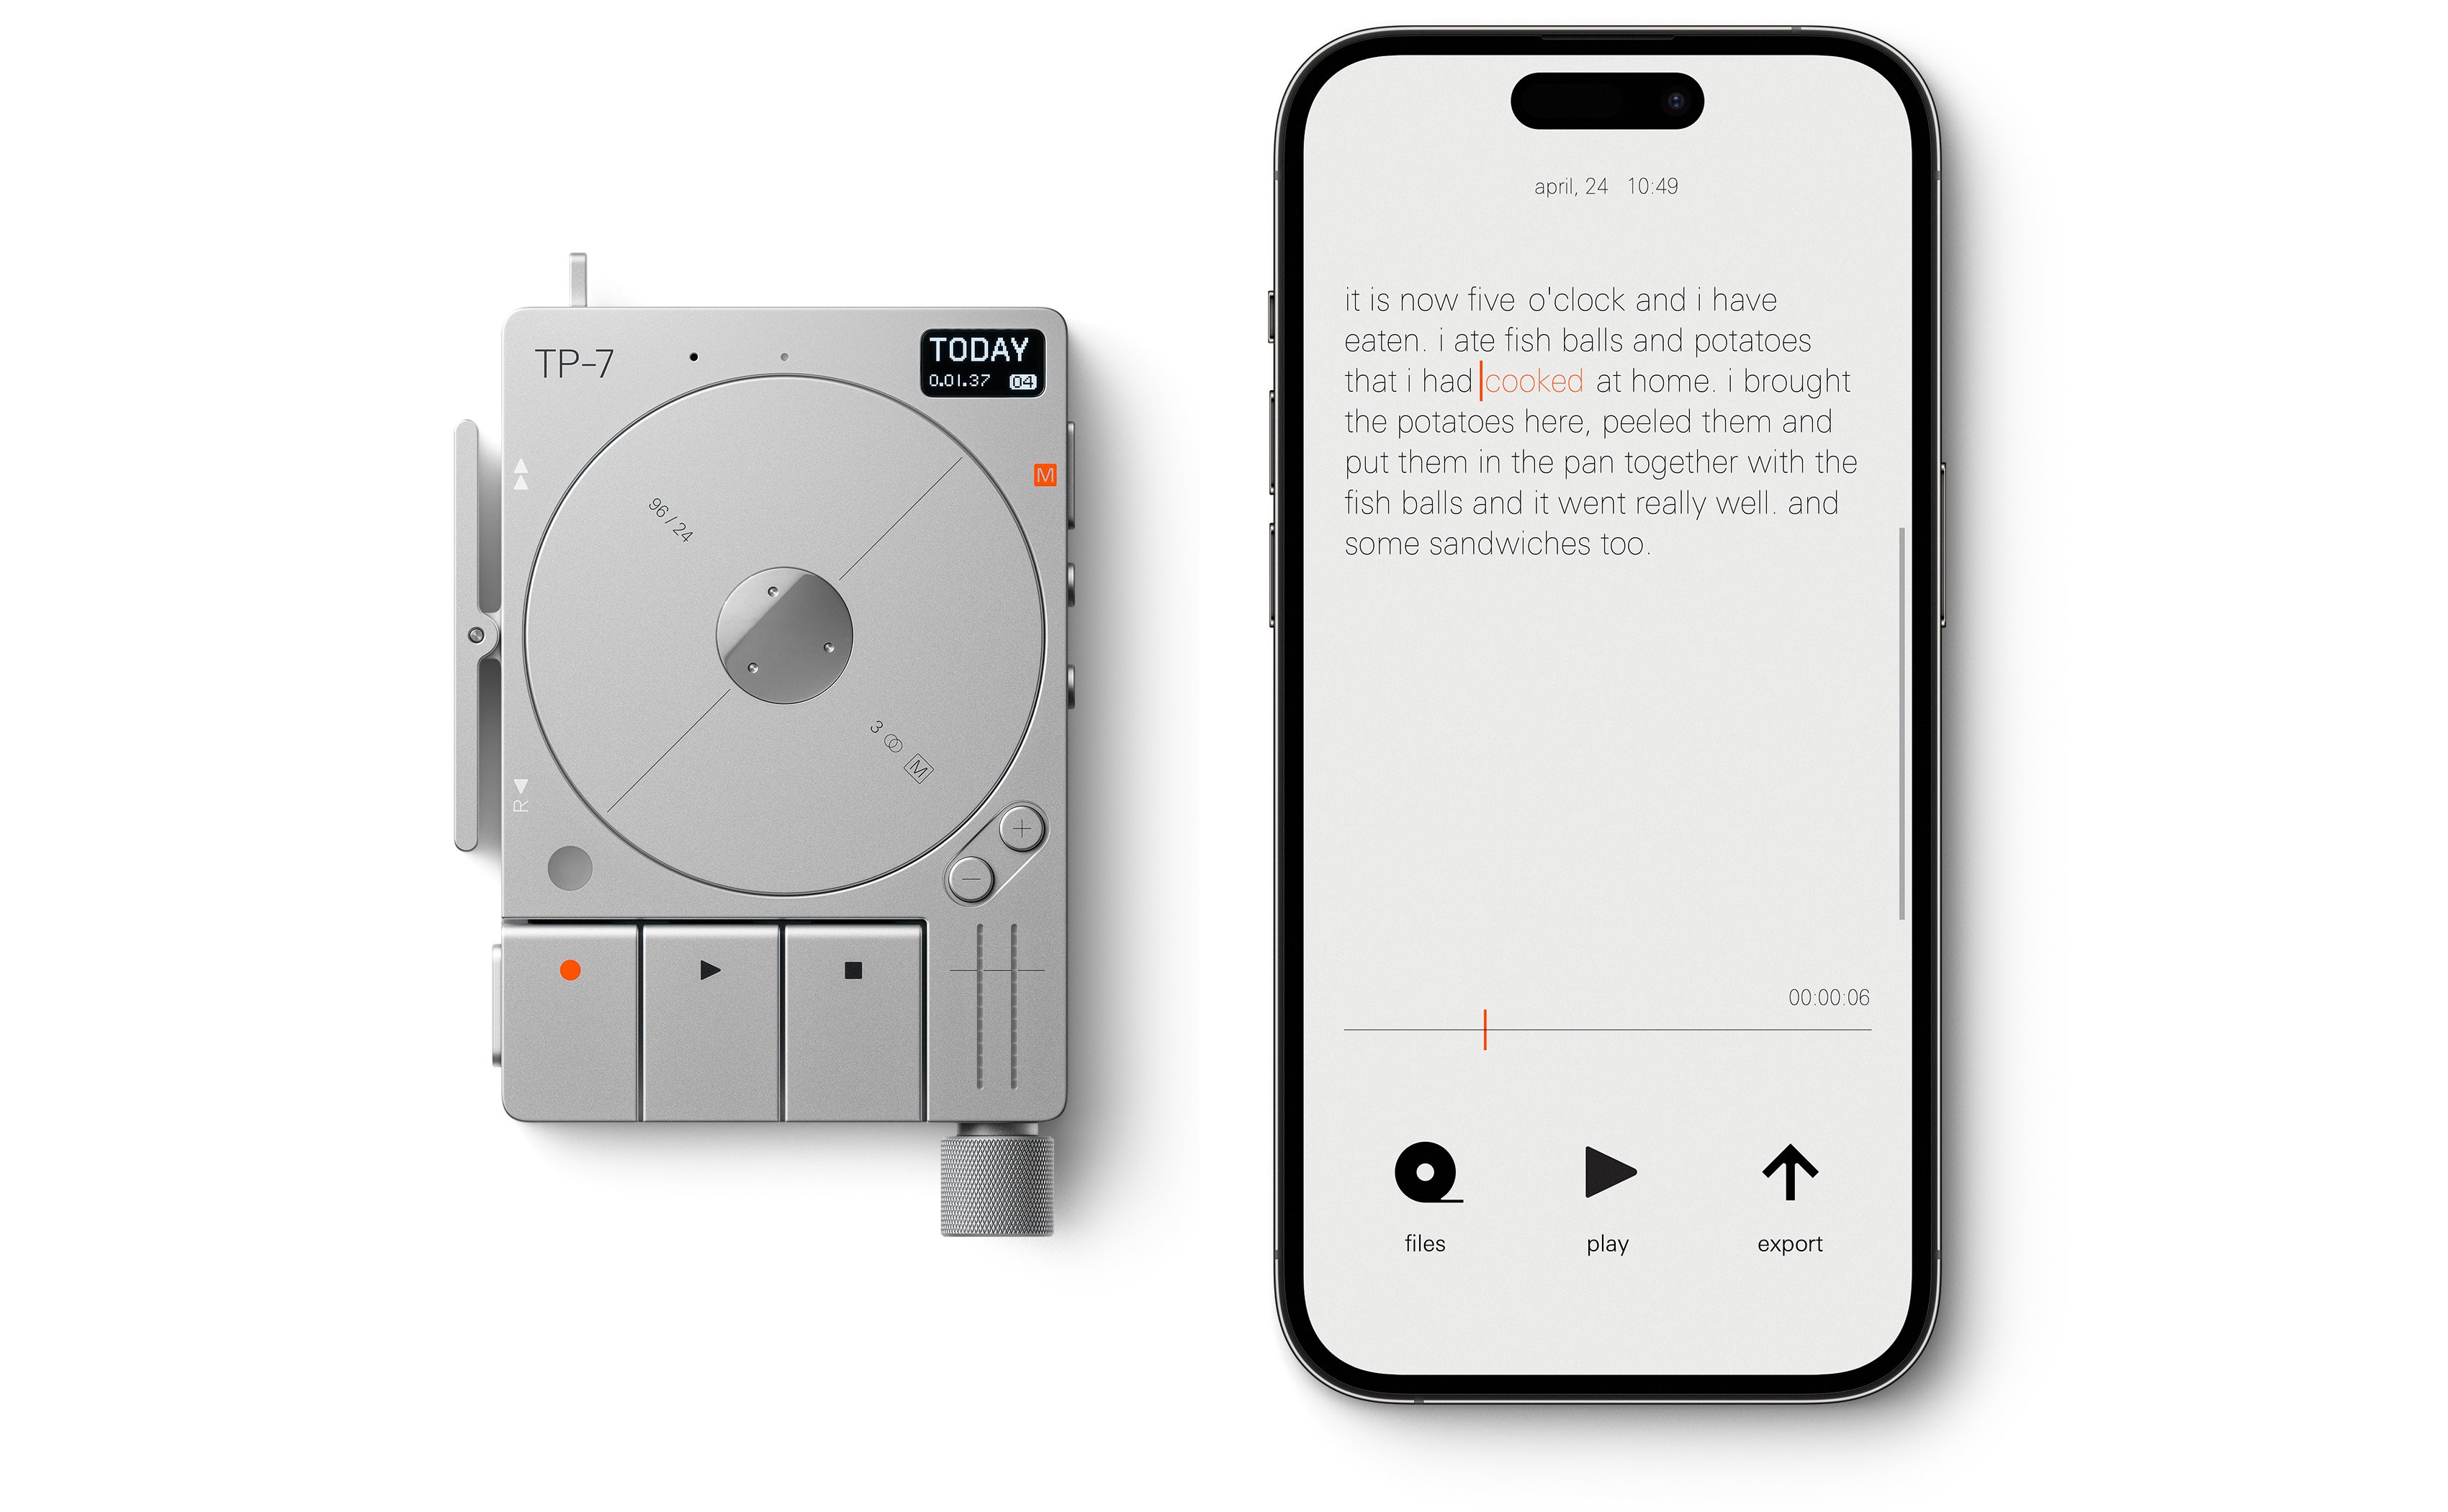 The Teenage Engineering TP-7 Field Recorder بجوار iPhone وتطبيق مع تسجيل مكتوب على الشاشة.